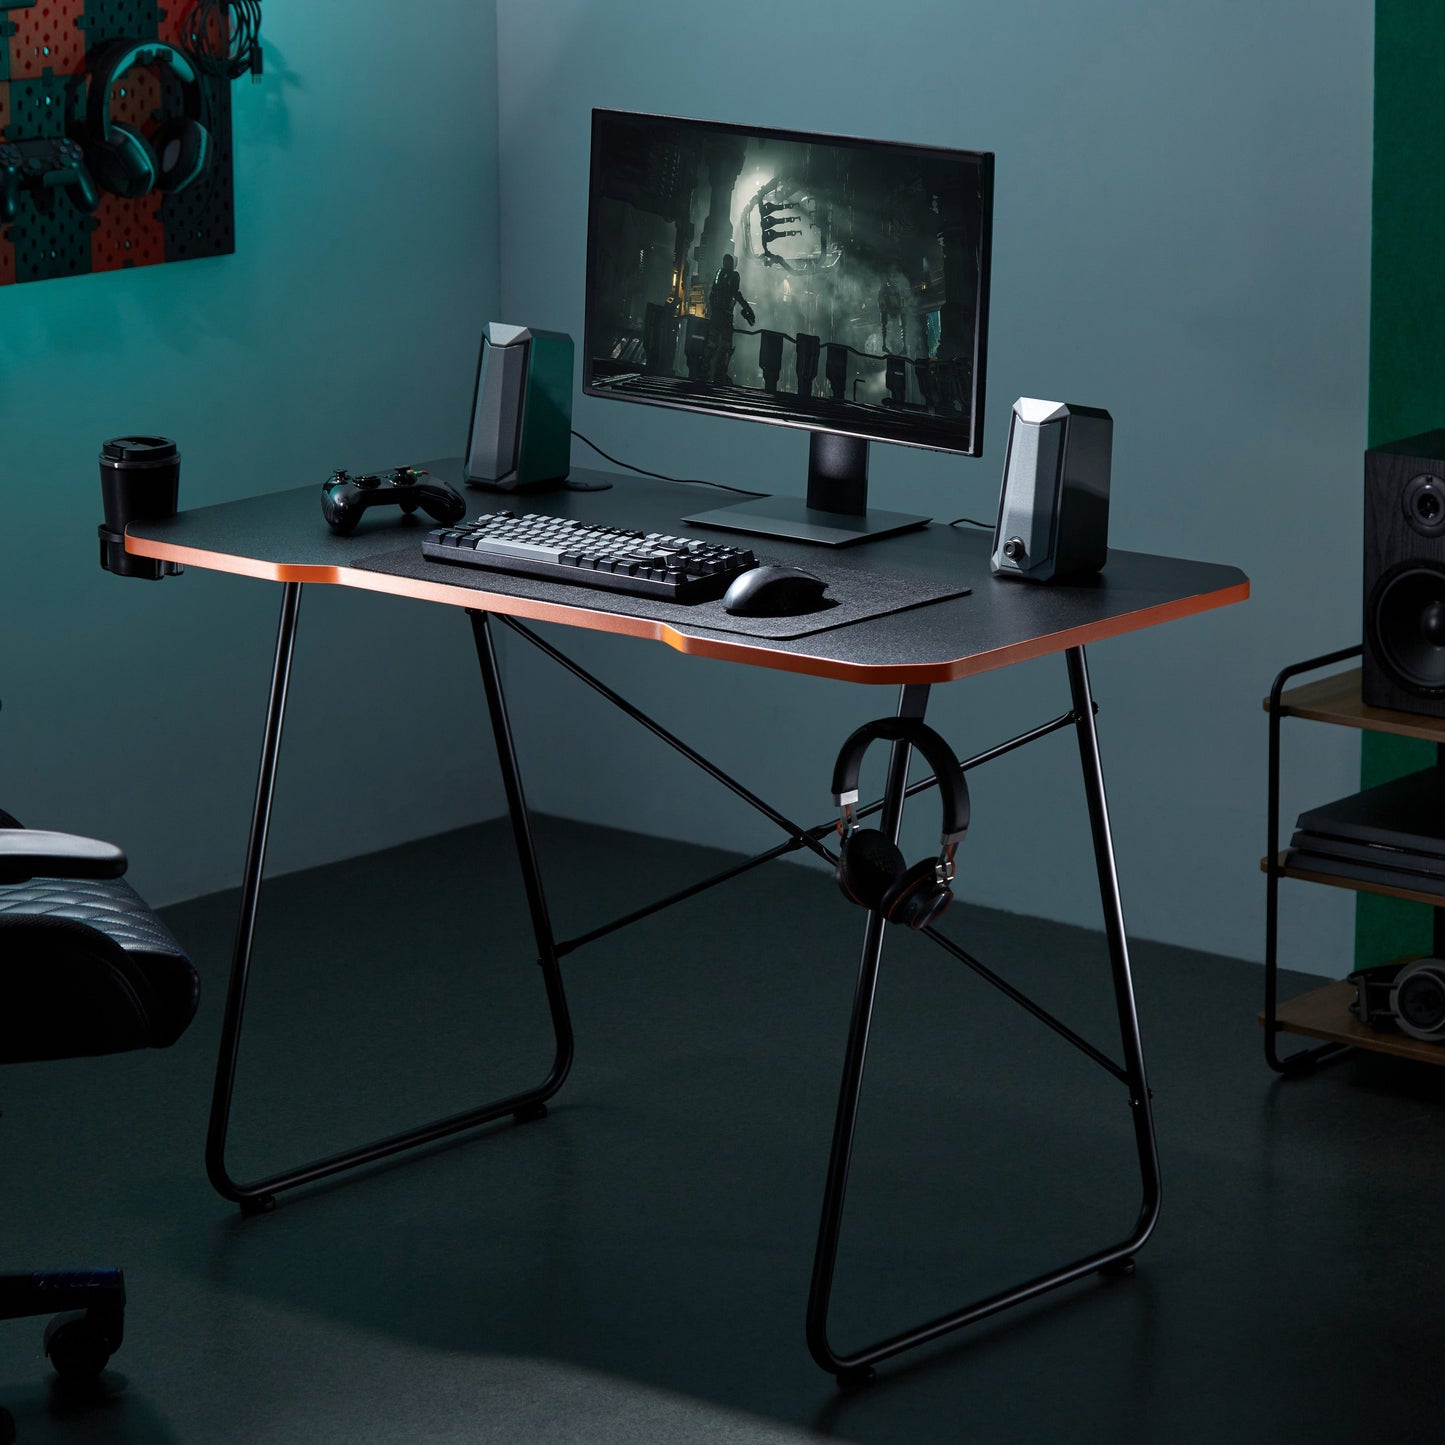 Maplin Gaming Desk with Headphone Hook & Cup Holder - Matte Black & Orange - maplin.co.uk